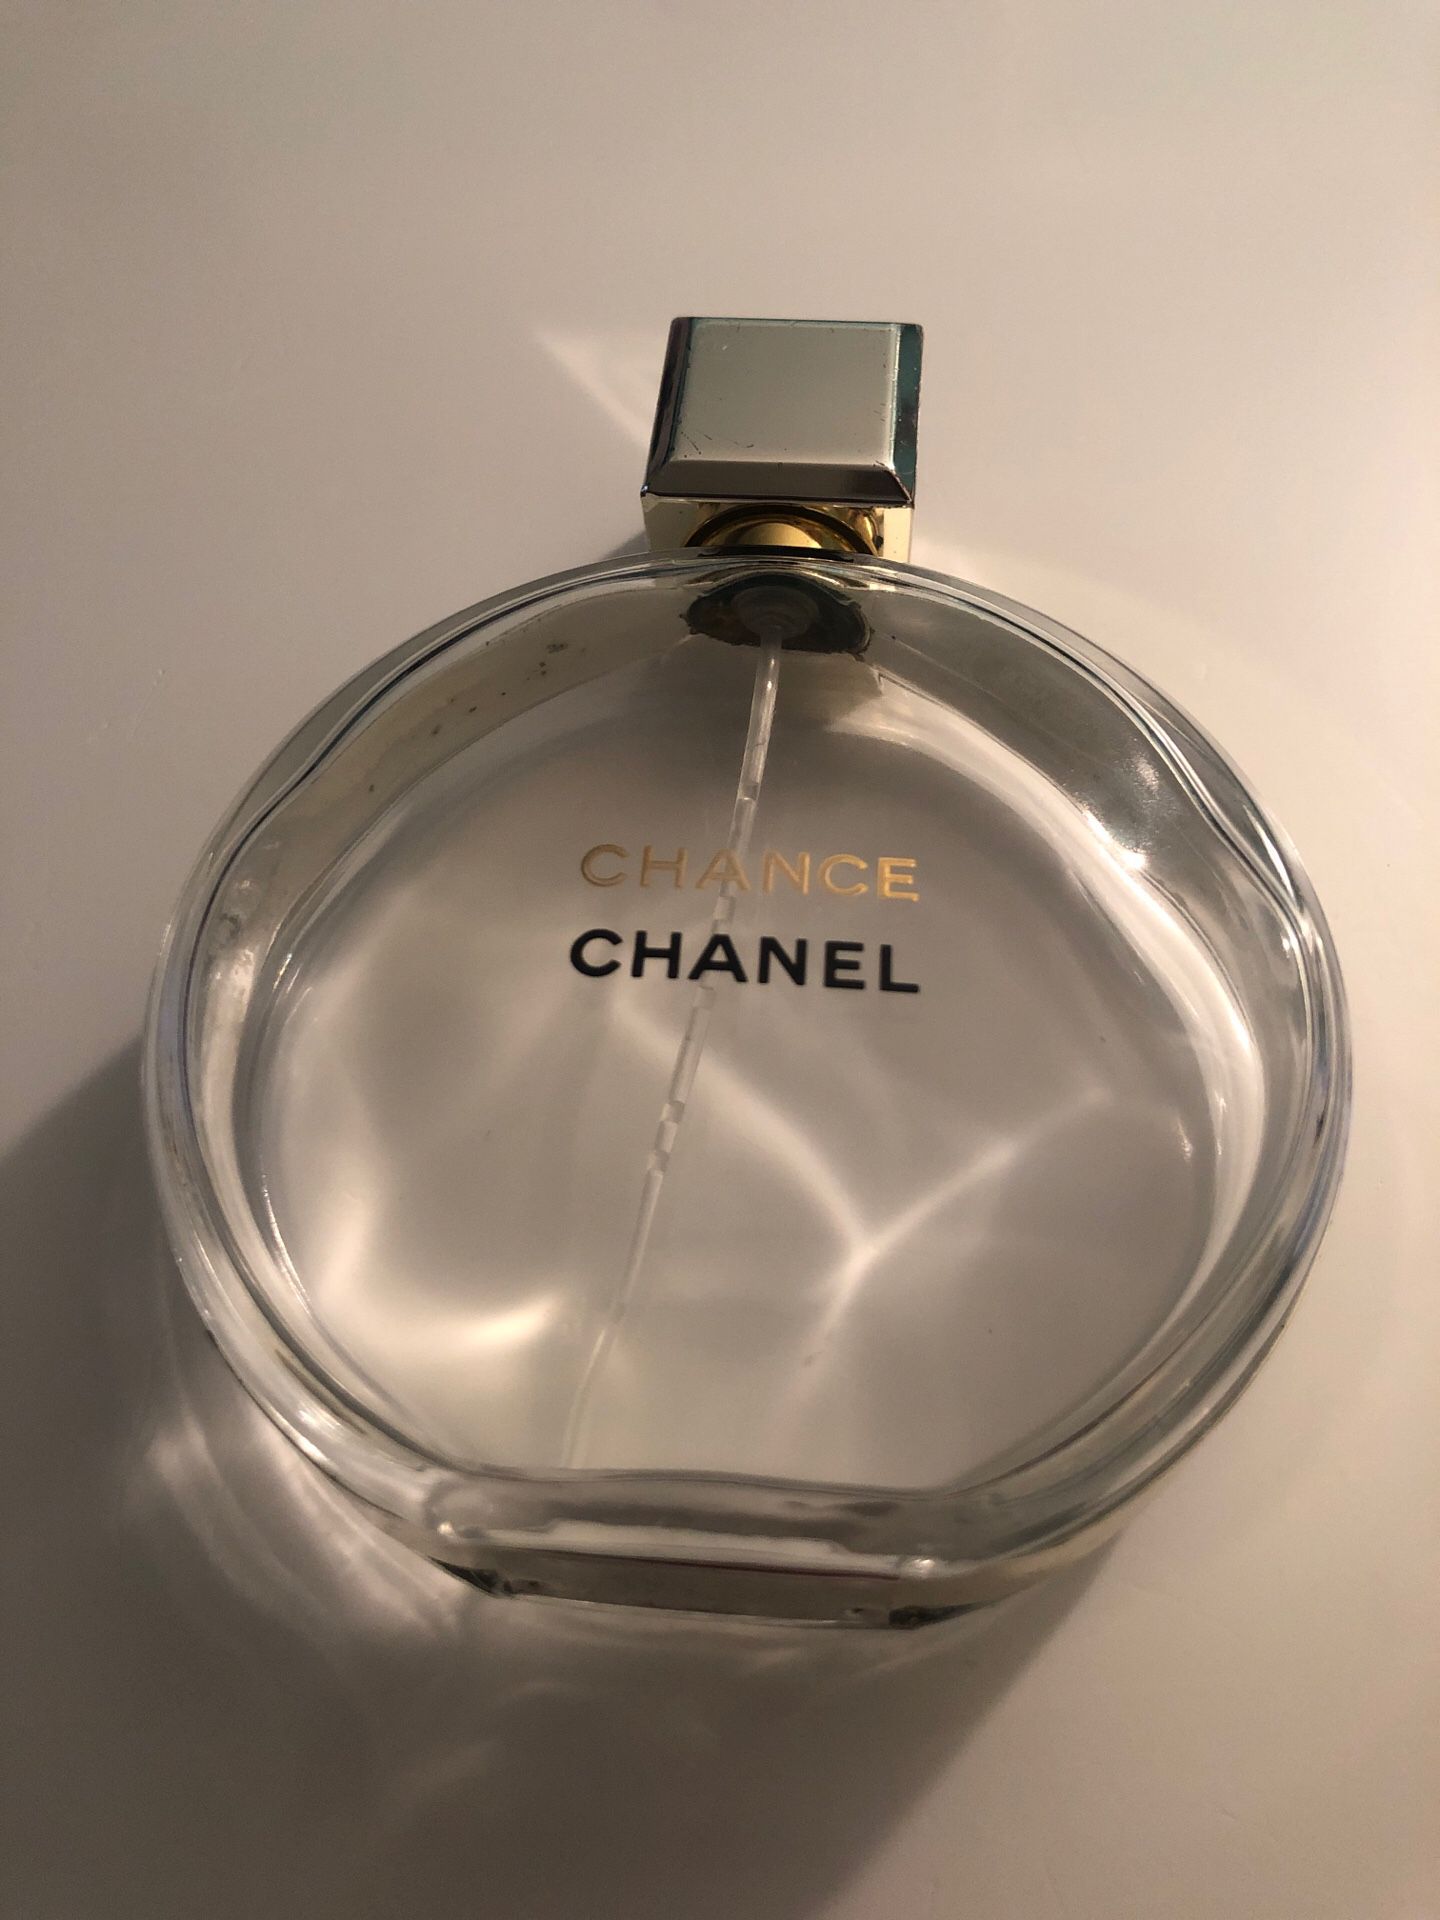 Empty*** Chanel chance empty perfume bottle 3.4 ounces